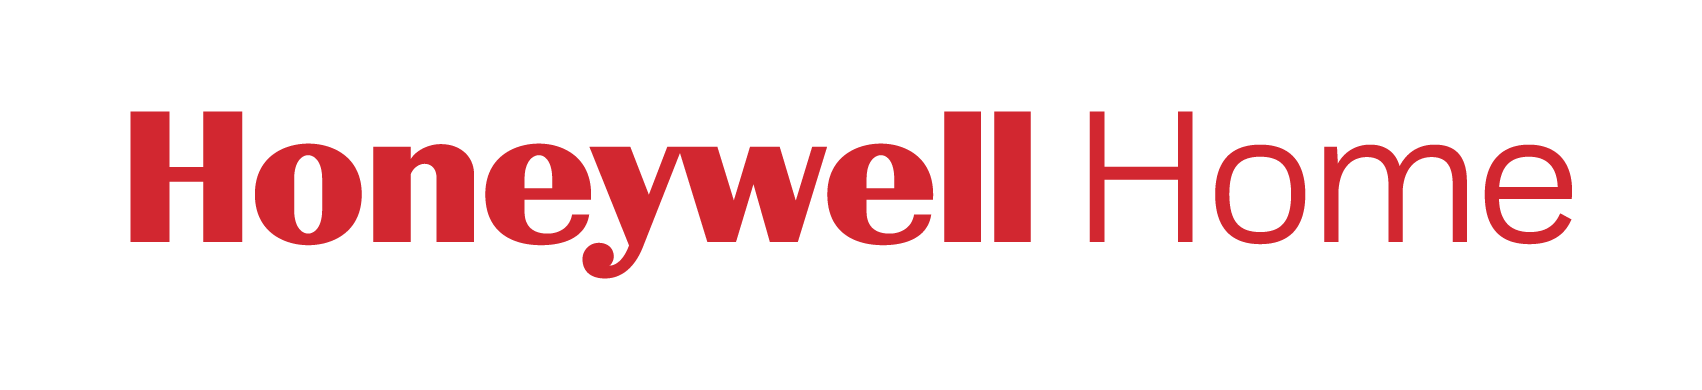 Honeywell home logo nov2220230109 2556 1lh9272